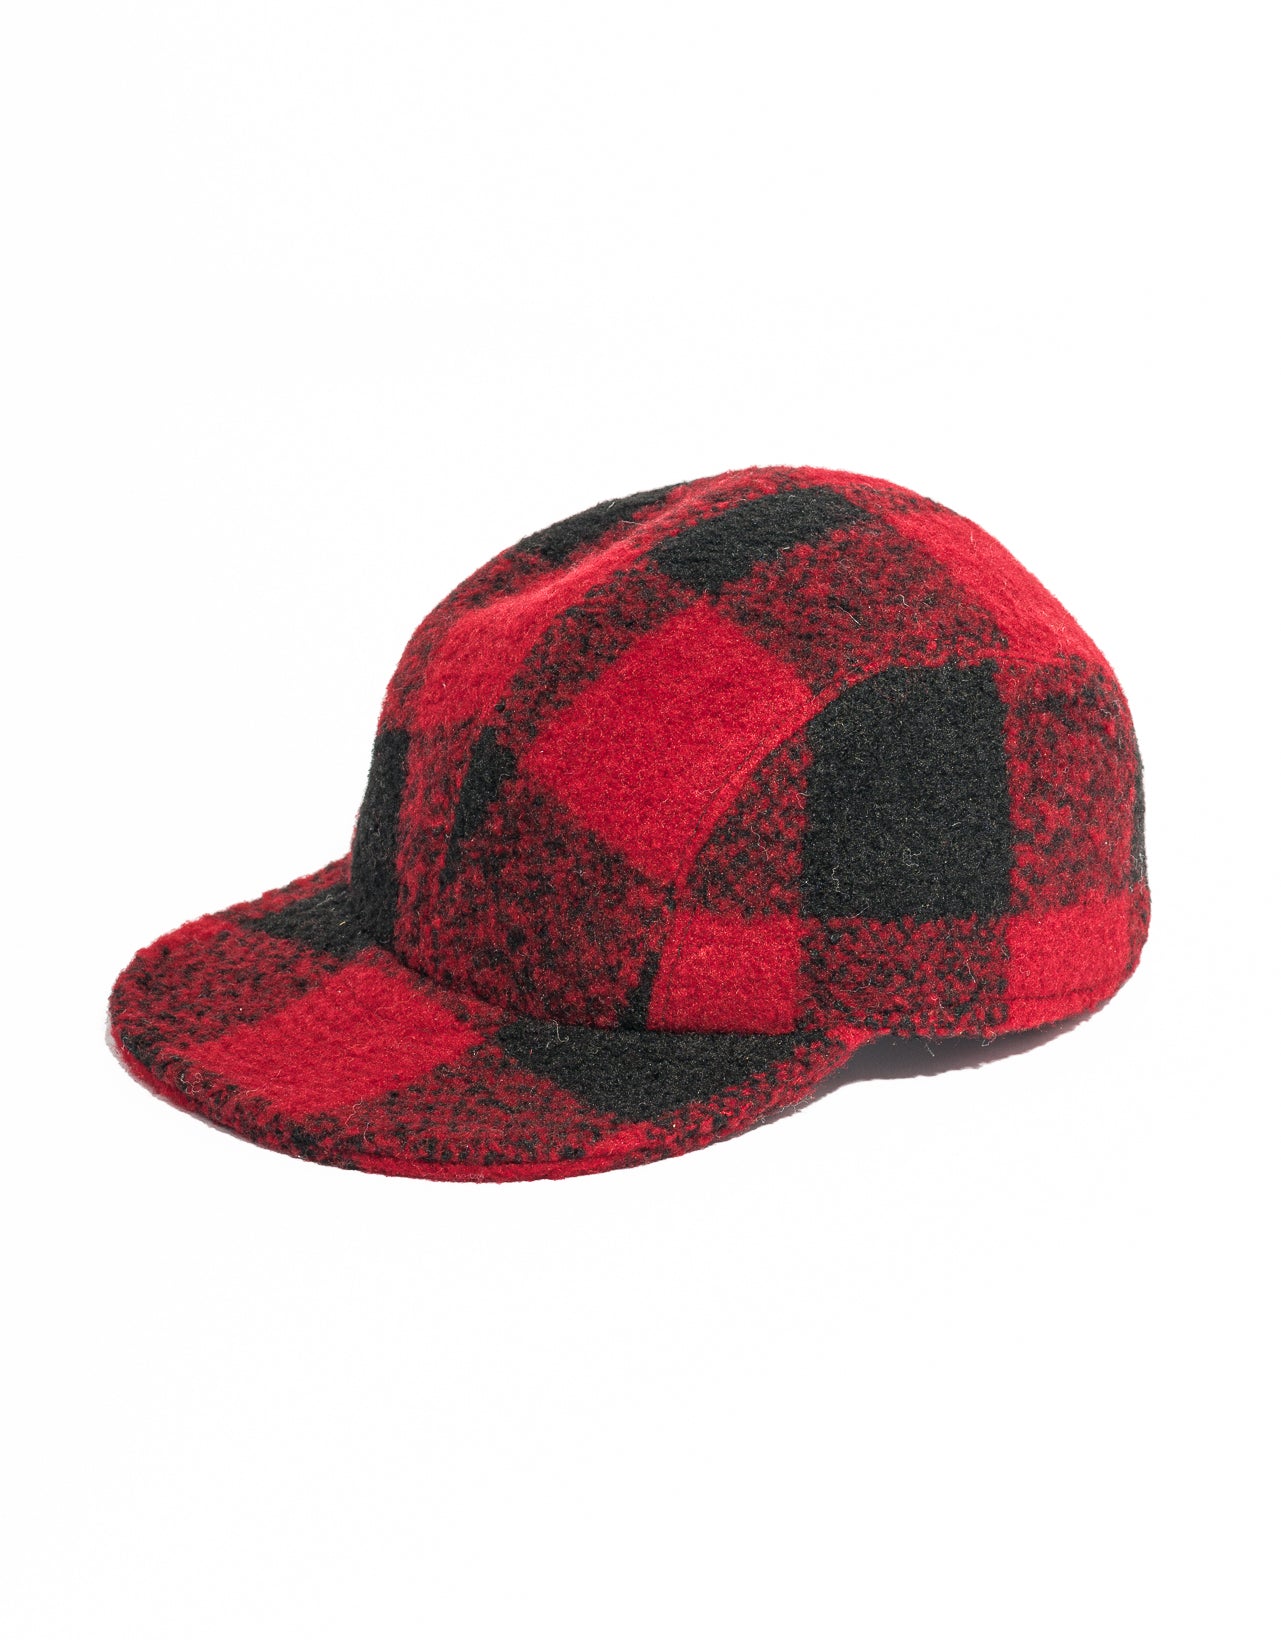 Buffalo Check Hat, Men's Winter Hats